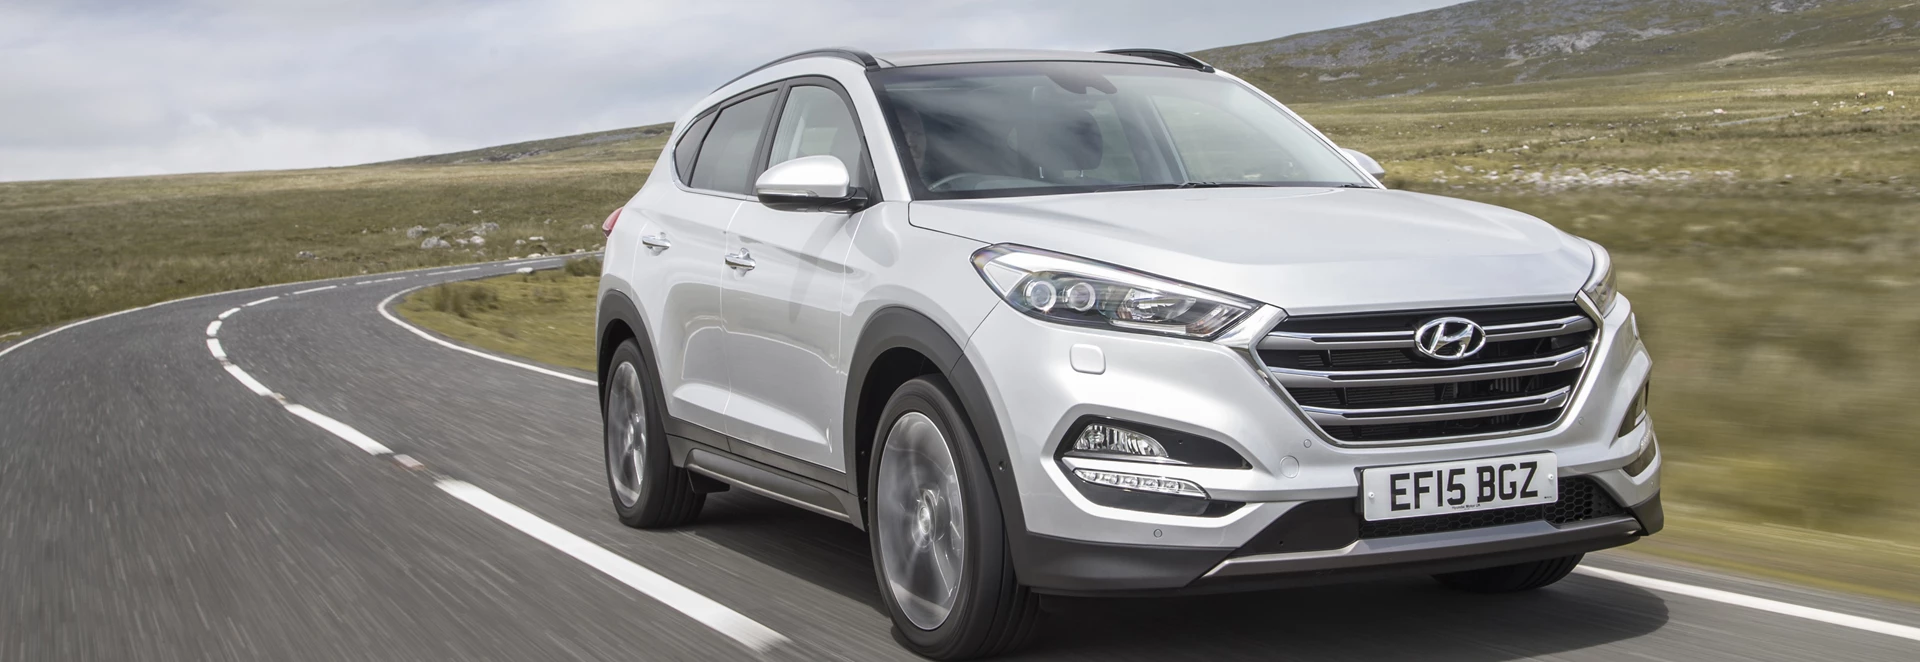 Hyundai Tucson crossover smashes sales records 